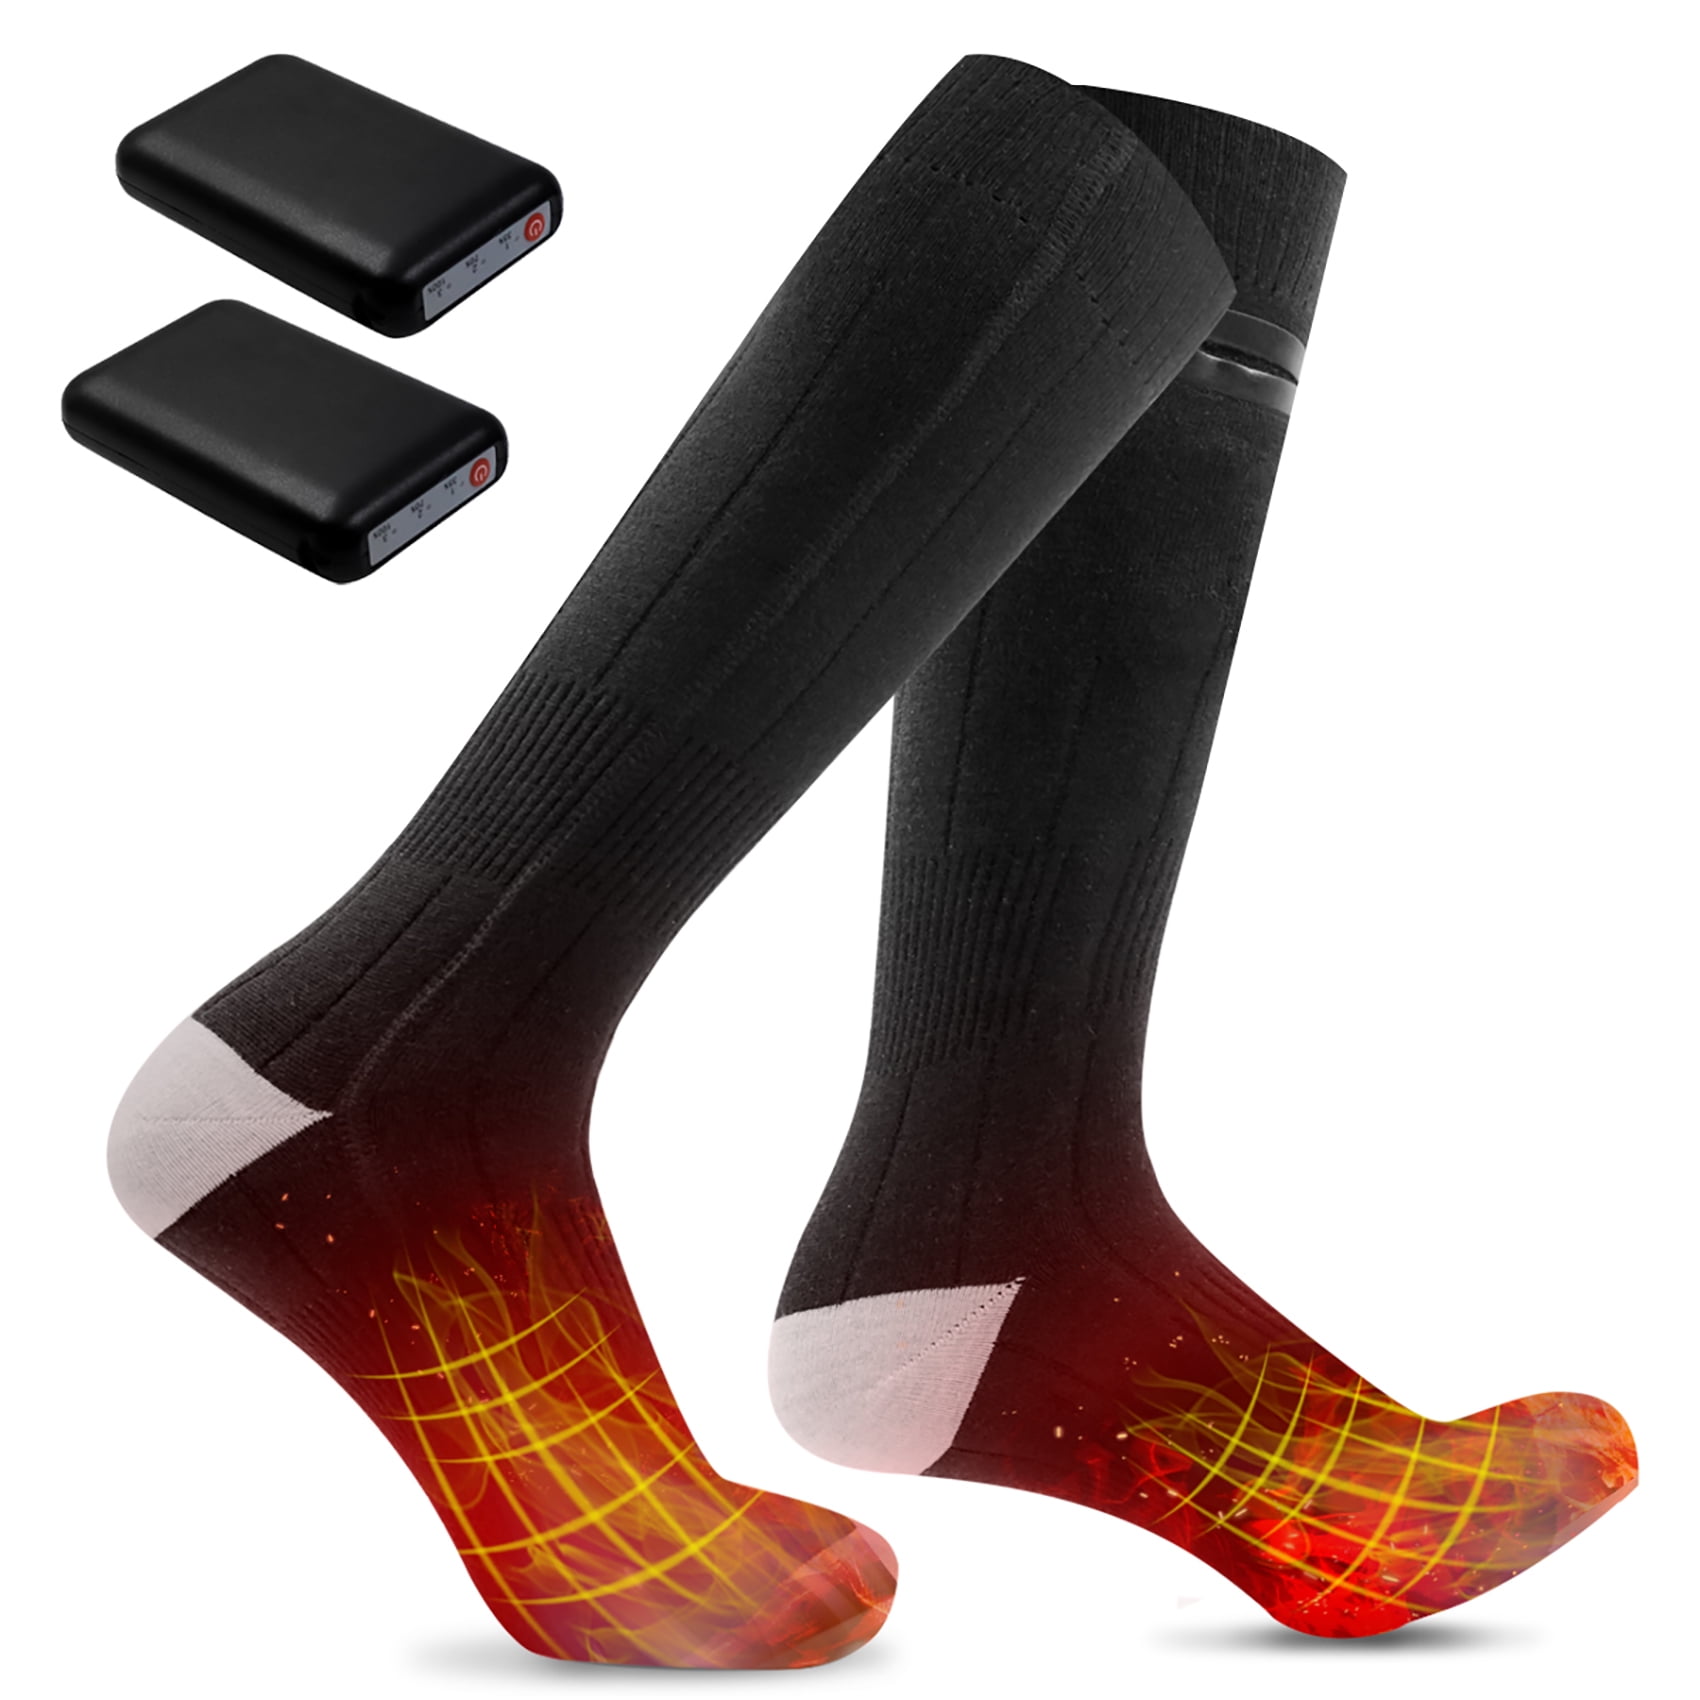 Electric Heated Socks Rechargeable Feet Foot Heating Winter Warmer Thermal Sock 